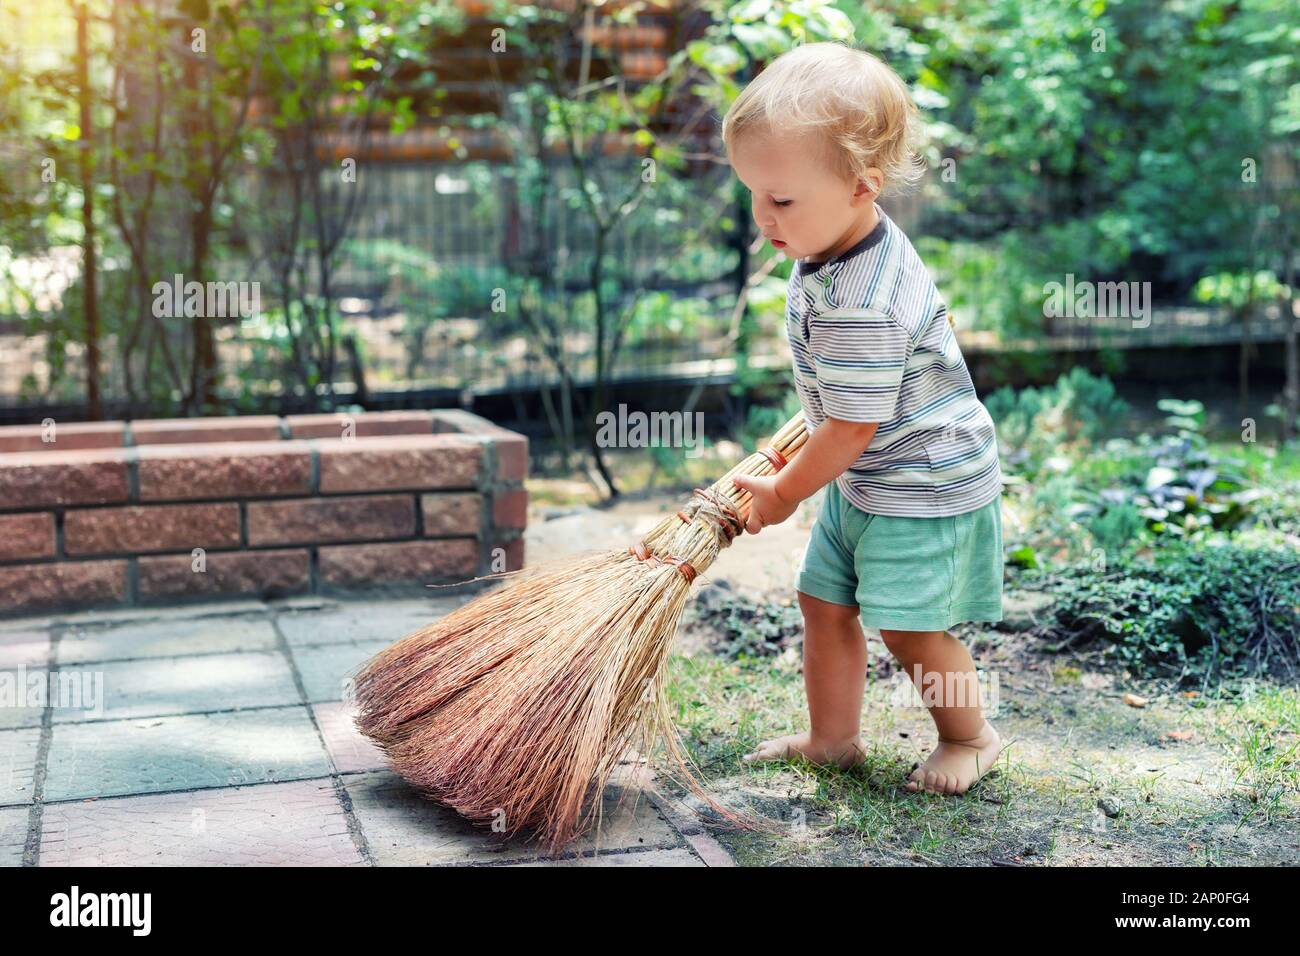 Girl Broom Sweep High Resolution Stock Photography and Images - Alamy